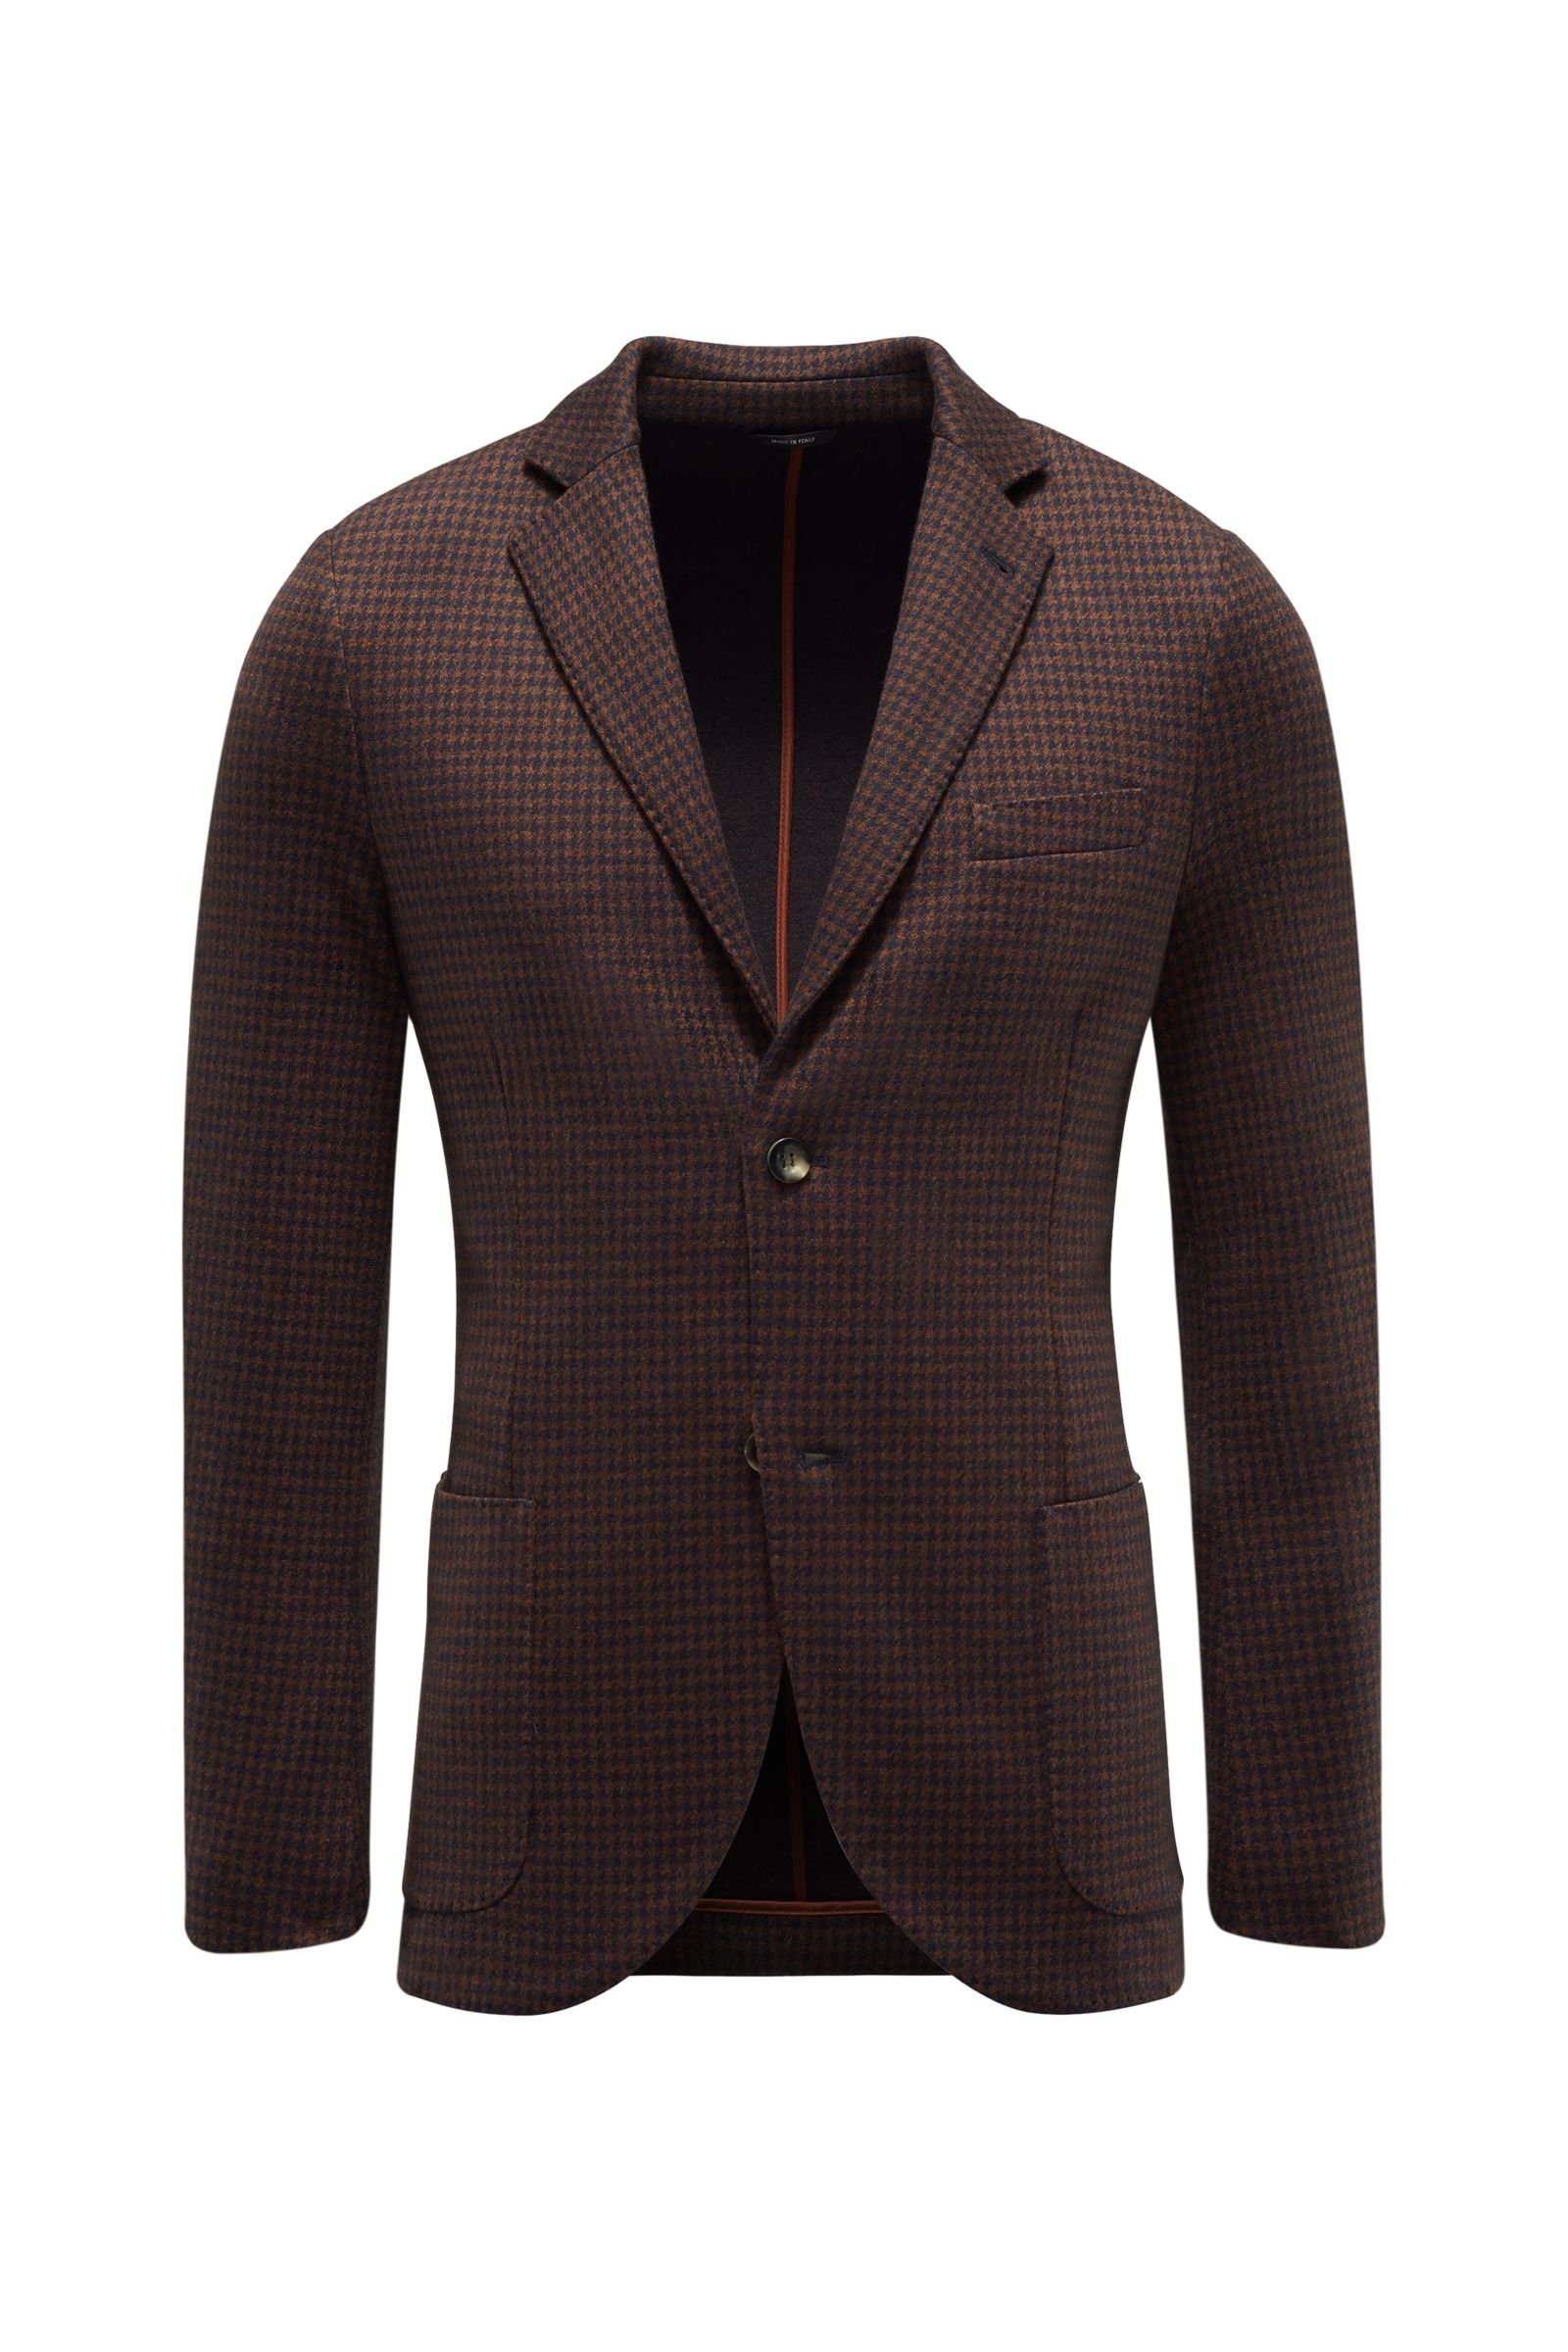 Jersey jacket 'Cash' brown/navy patterned